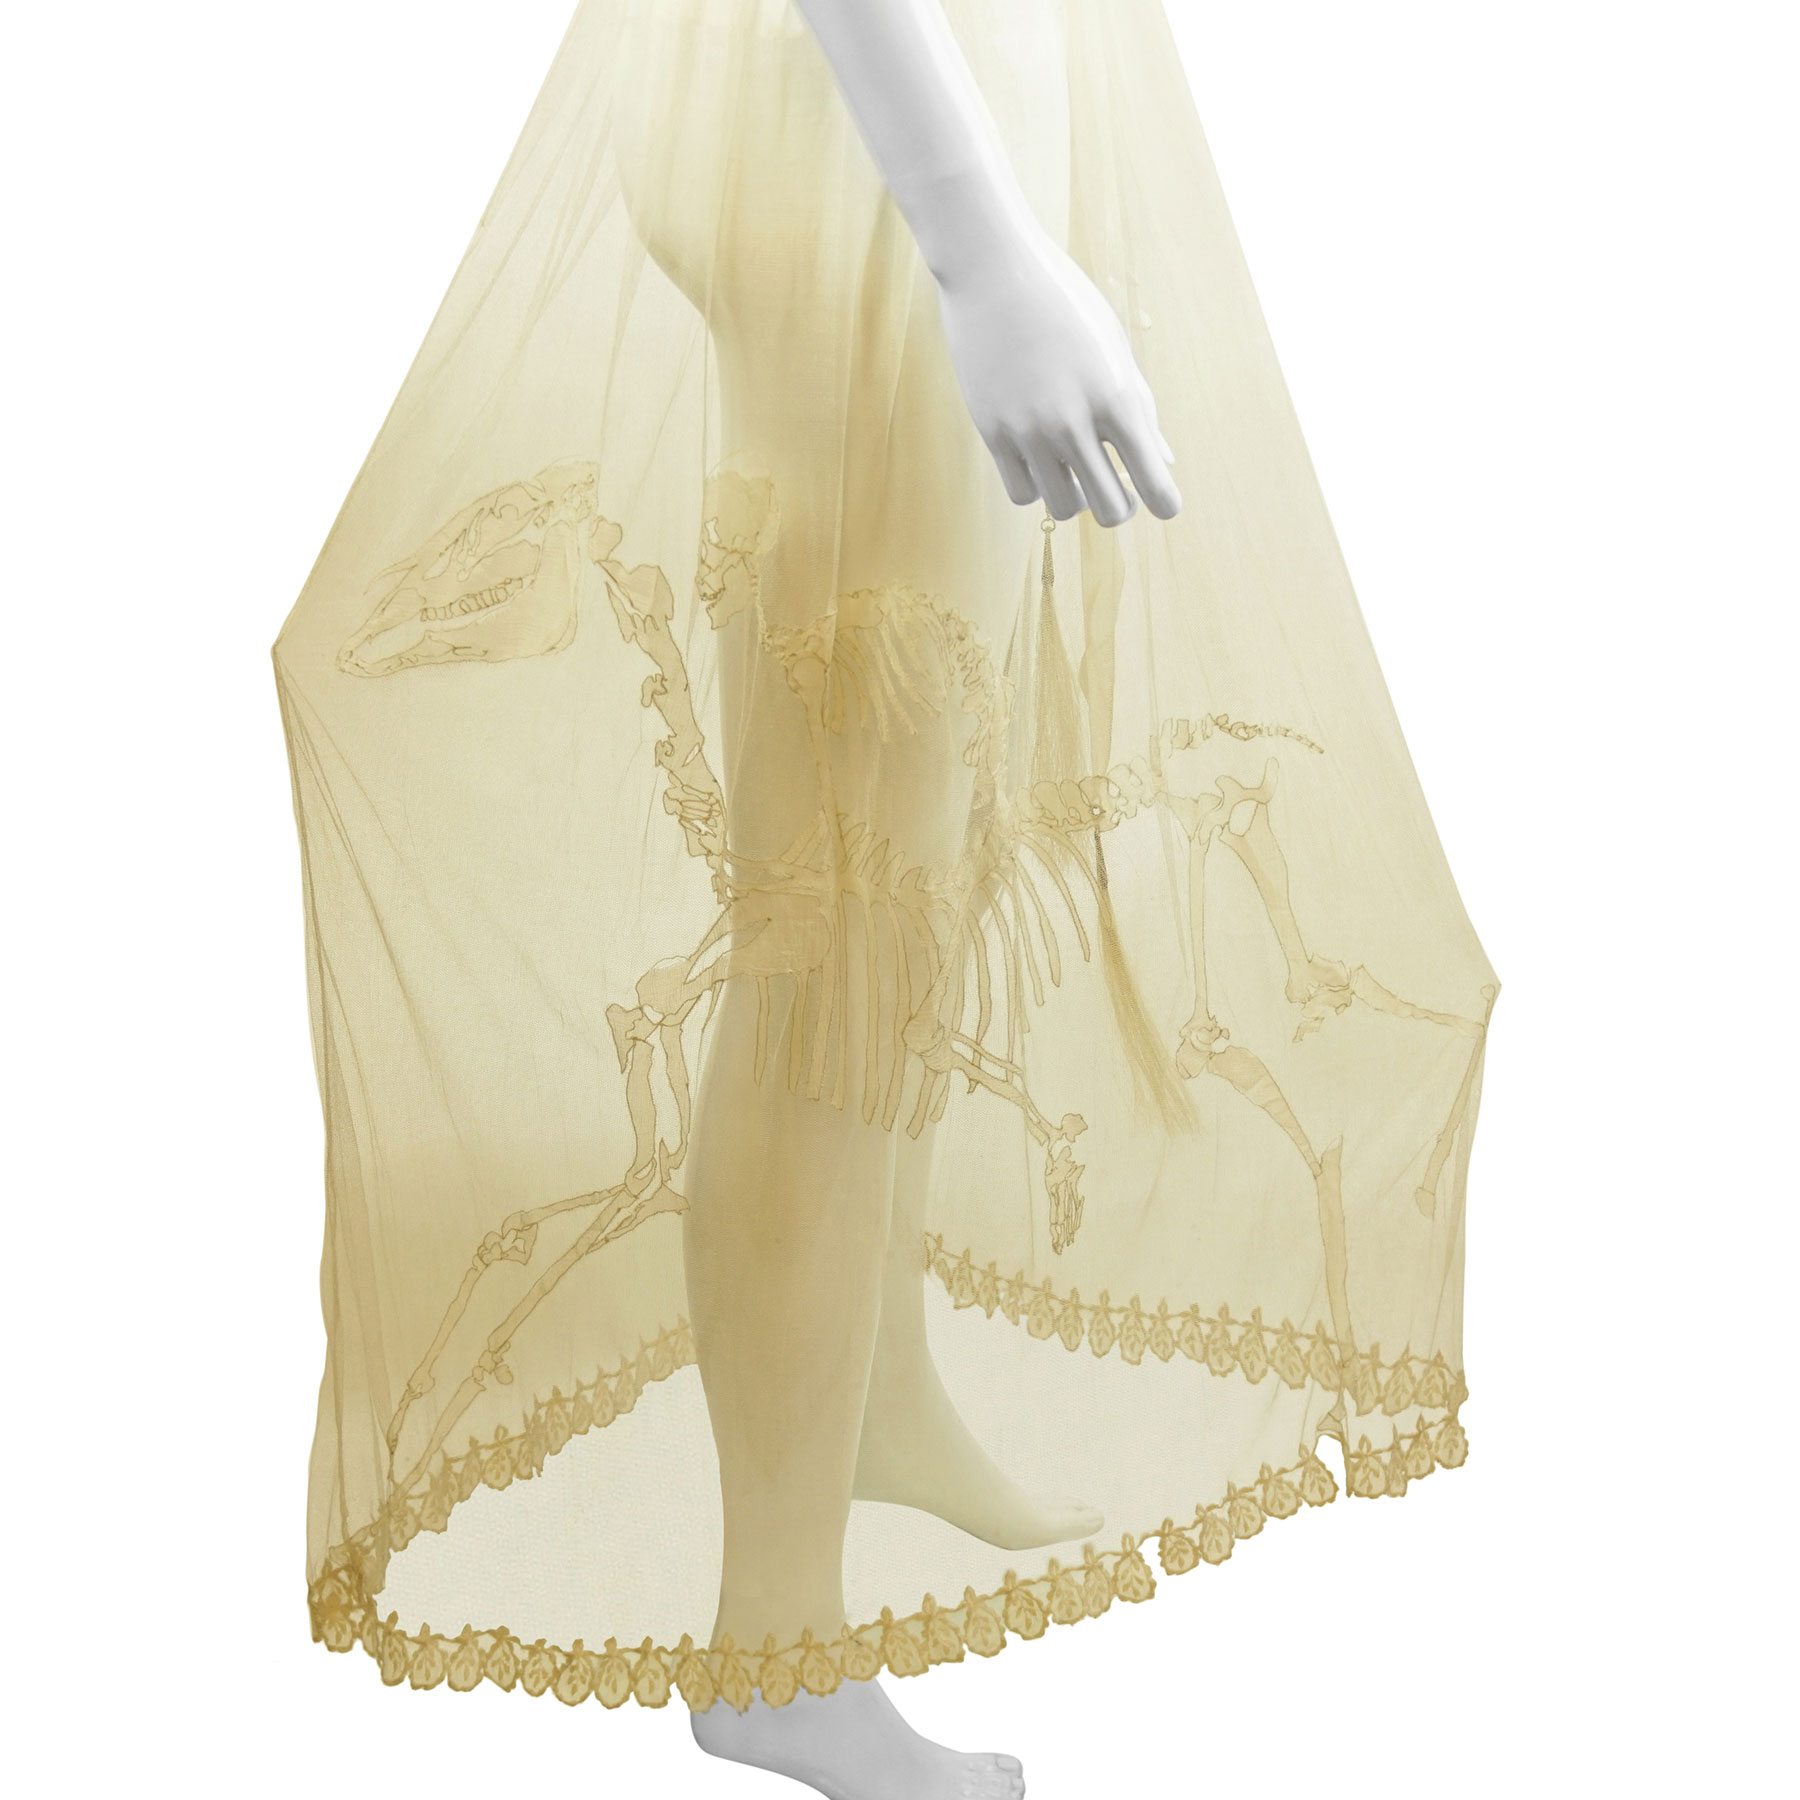 Steph Aman, Skeleton Horse Dress